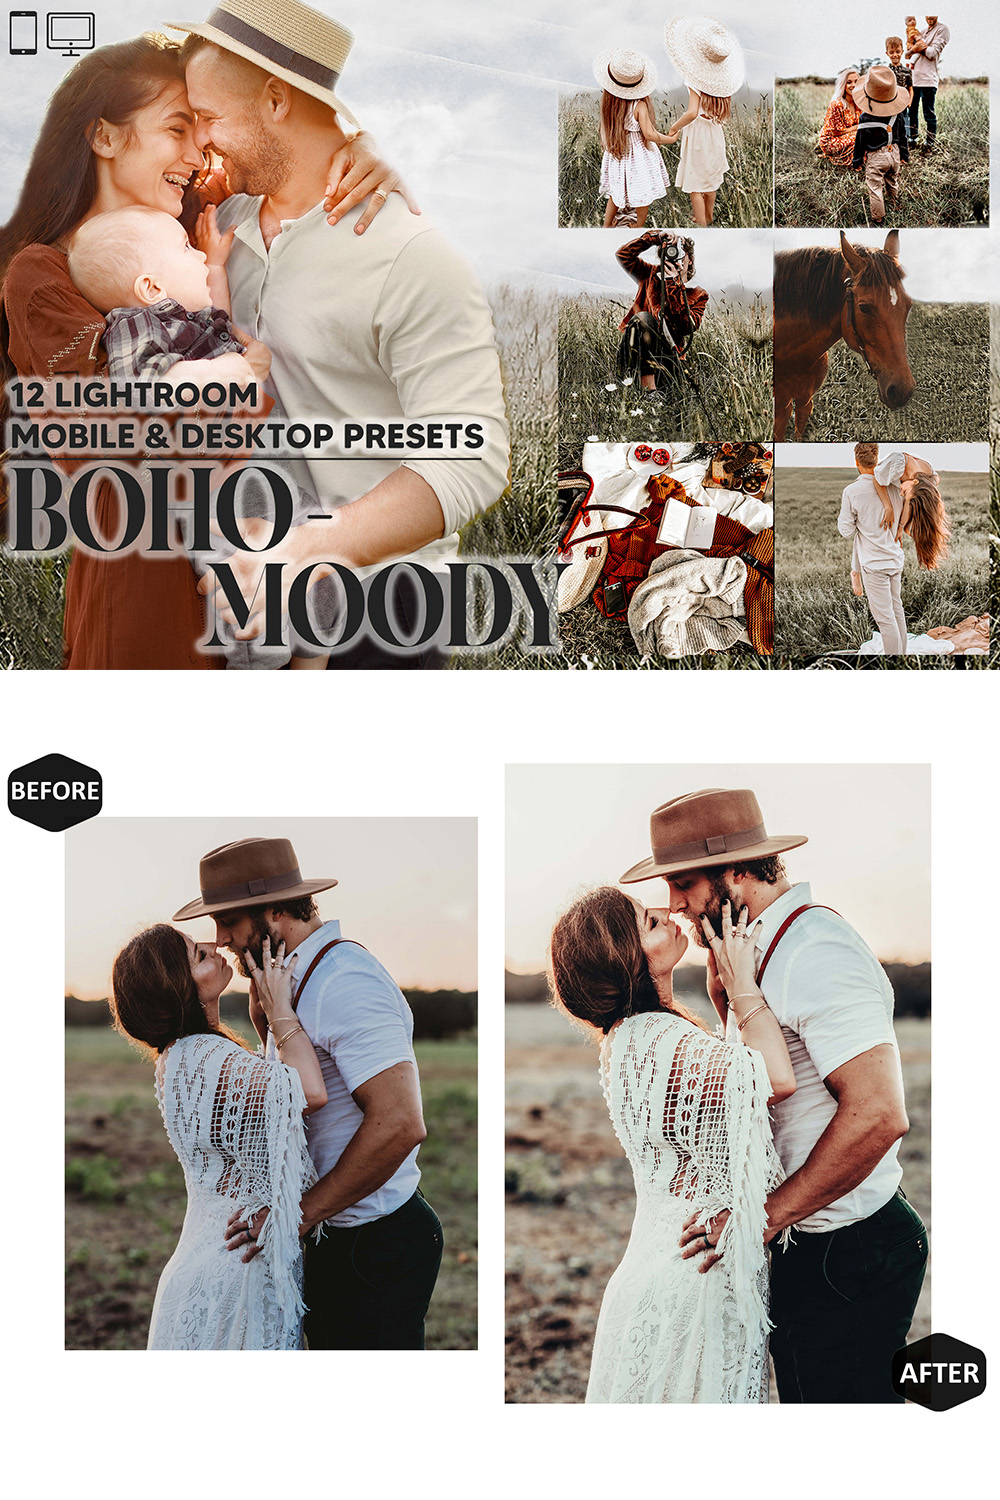 12 Boho-Moody Lightroom Presets, Rustic Mobile Preset, Family Bohemian Desktop, Lifestyle Portrait Theme Instagram LR Filter DNG Natural pinterest preview image.